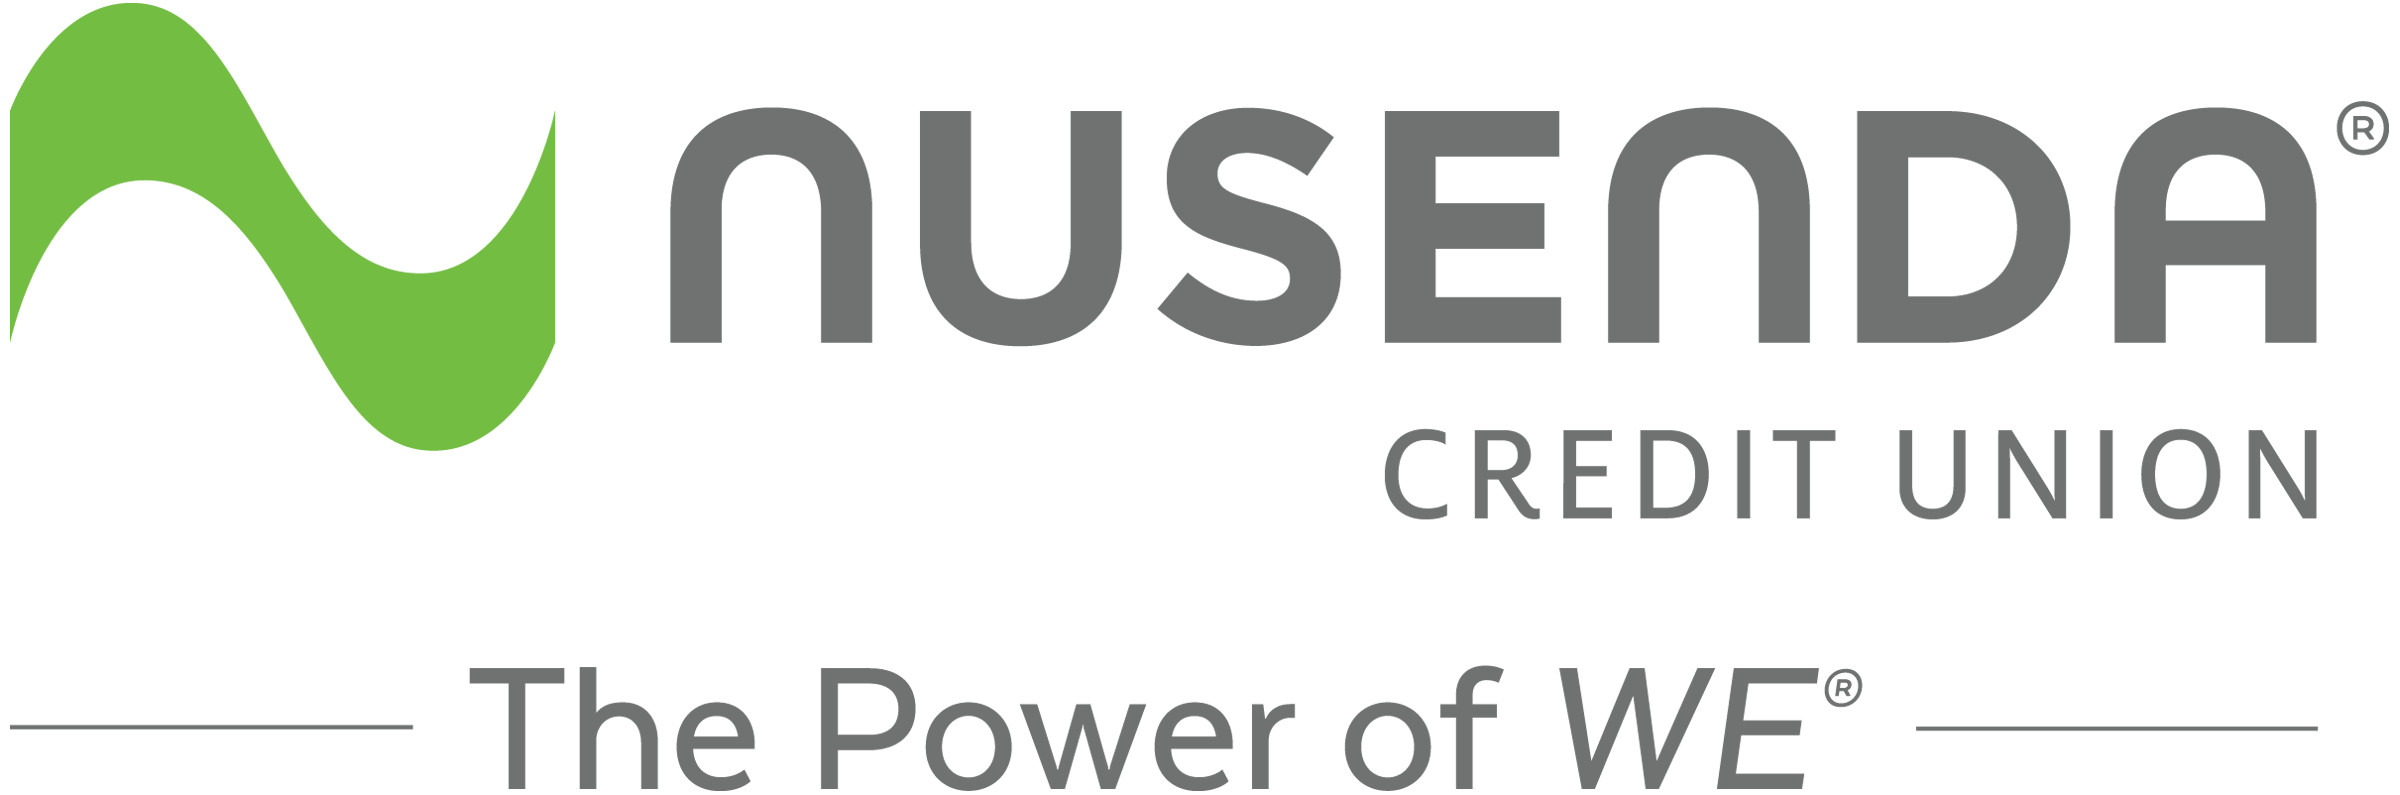 Nusenda Credit Union Company Logo